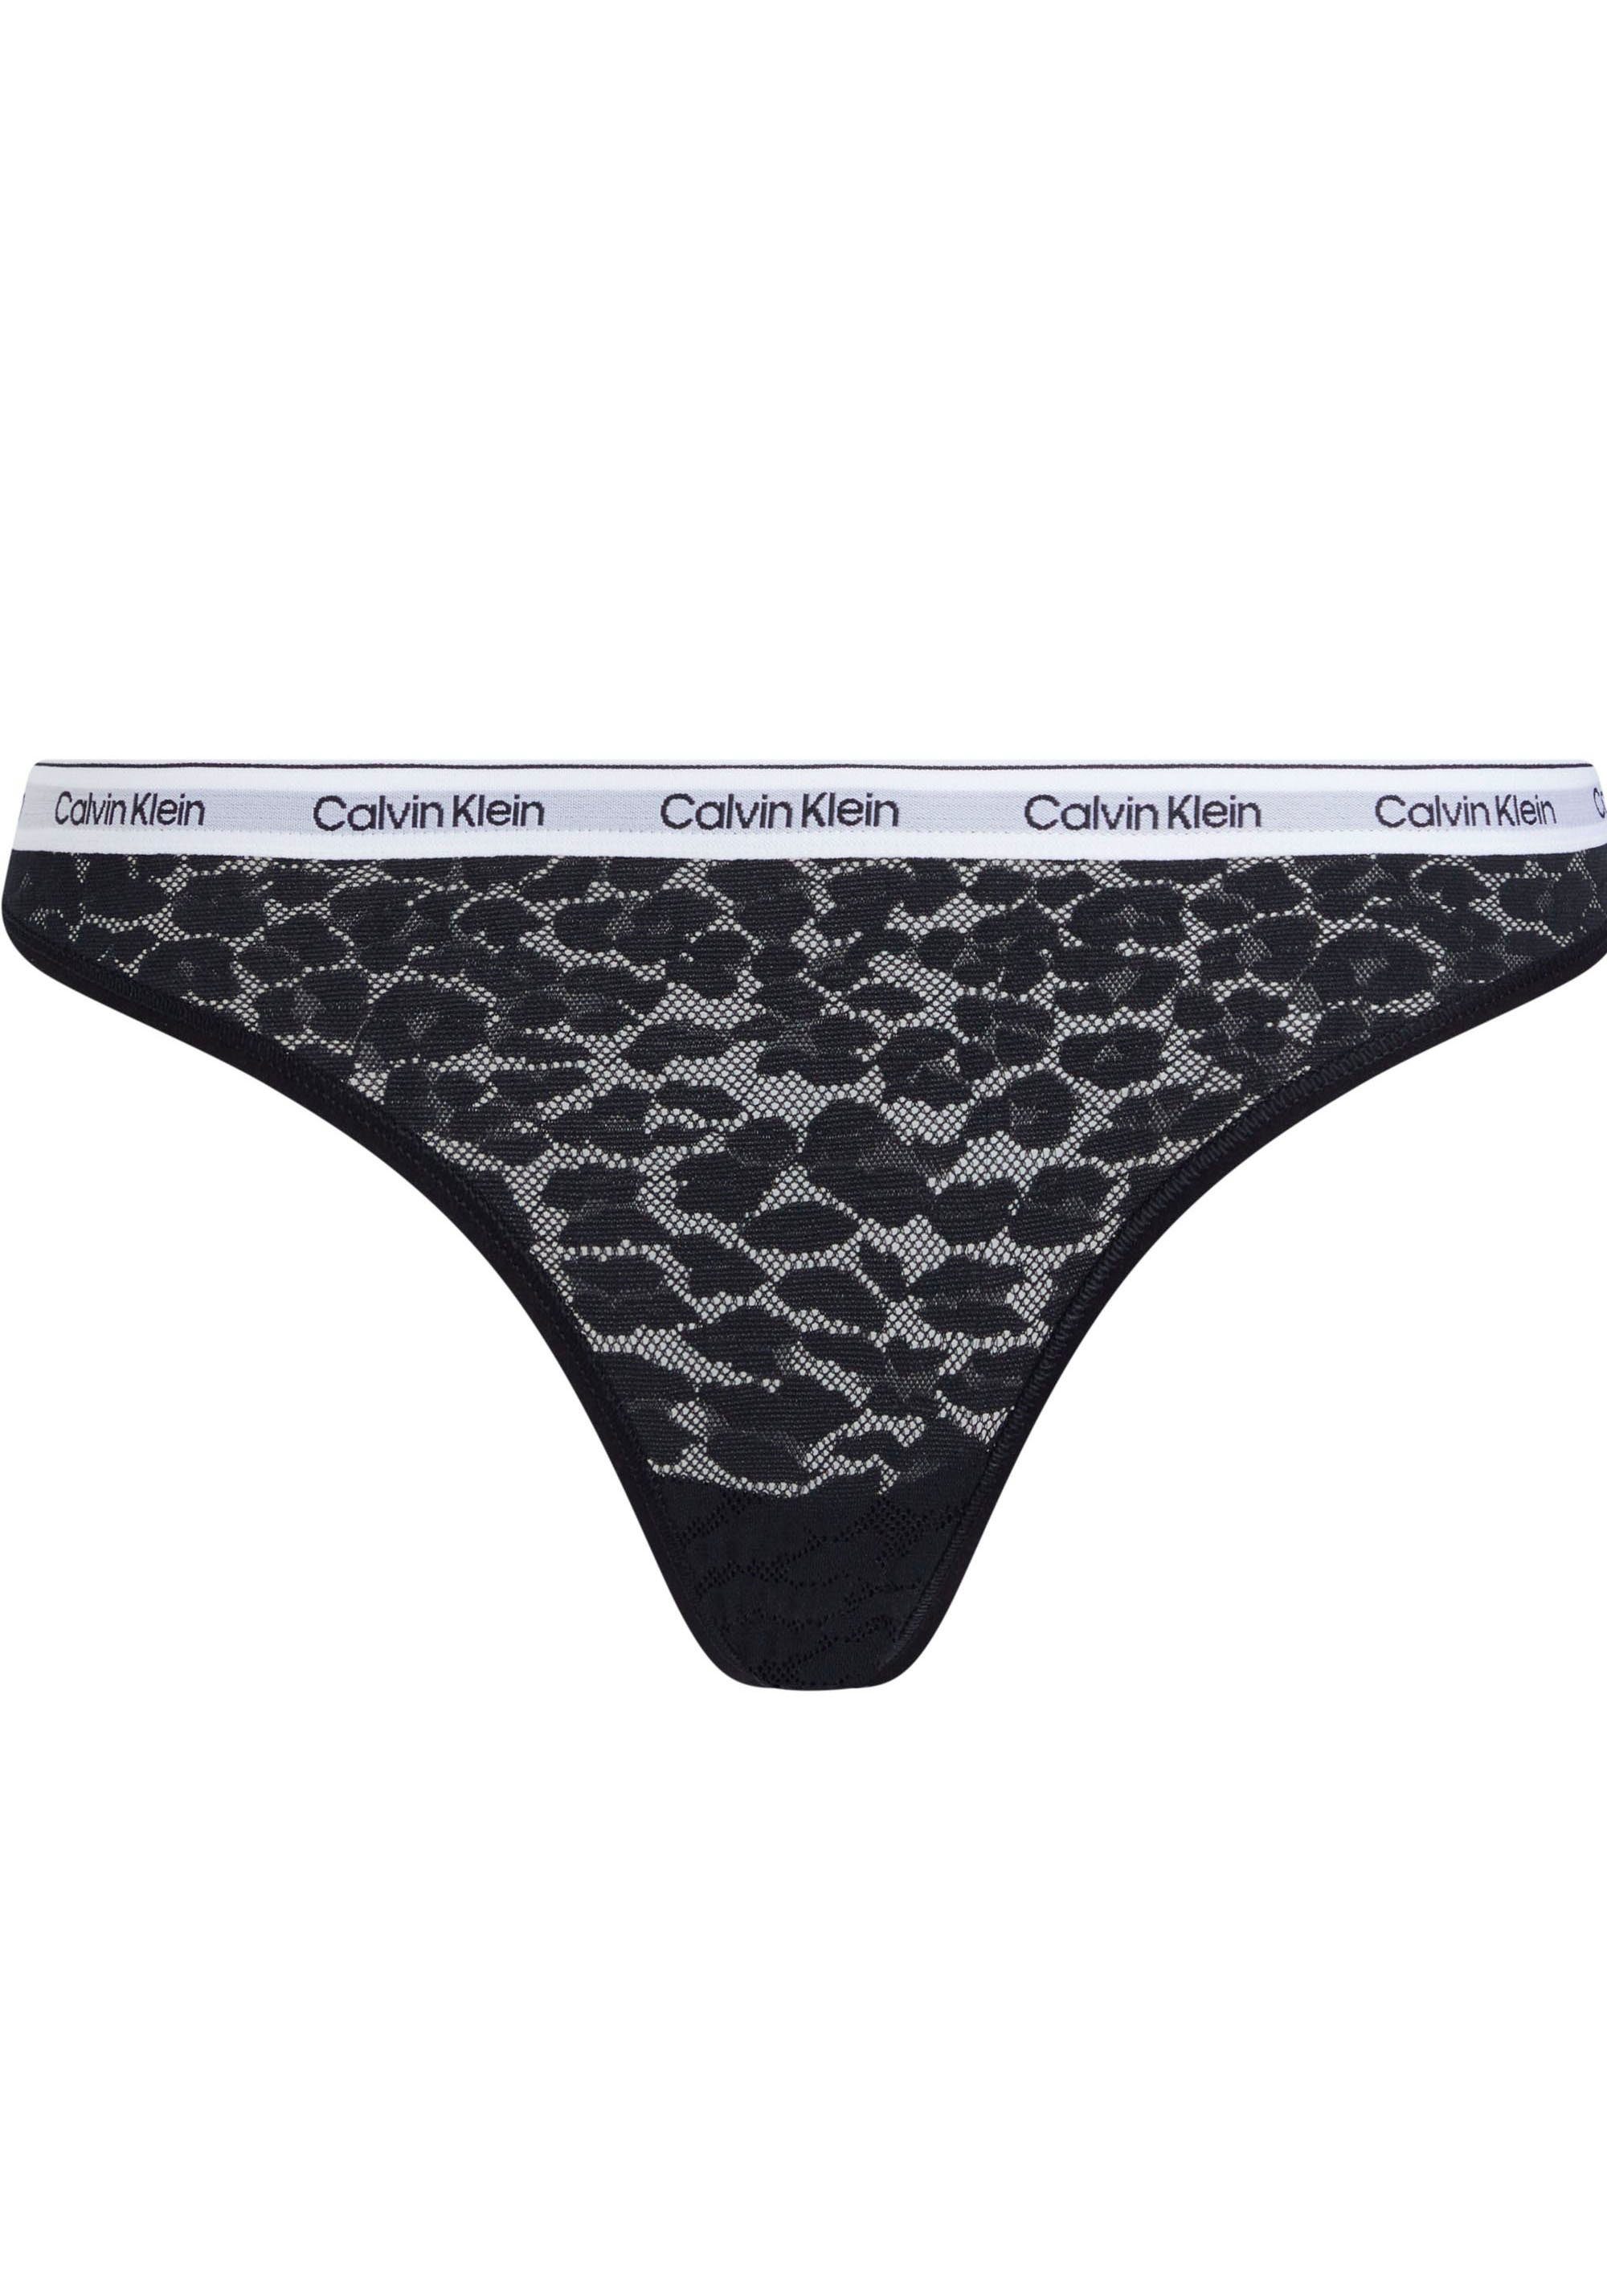 Calvin mit Klein Underwear schwarz BIKINI Bikinislip CK-Logoschriftzug